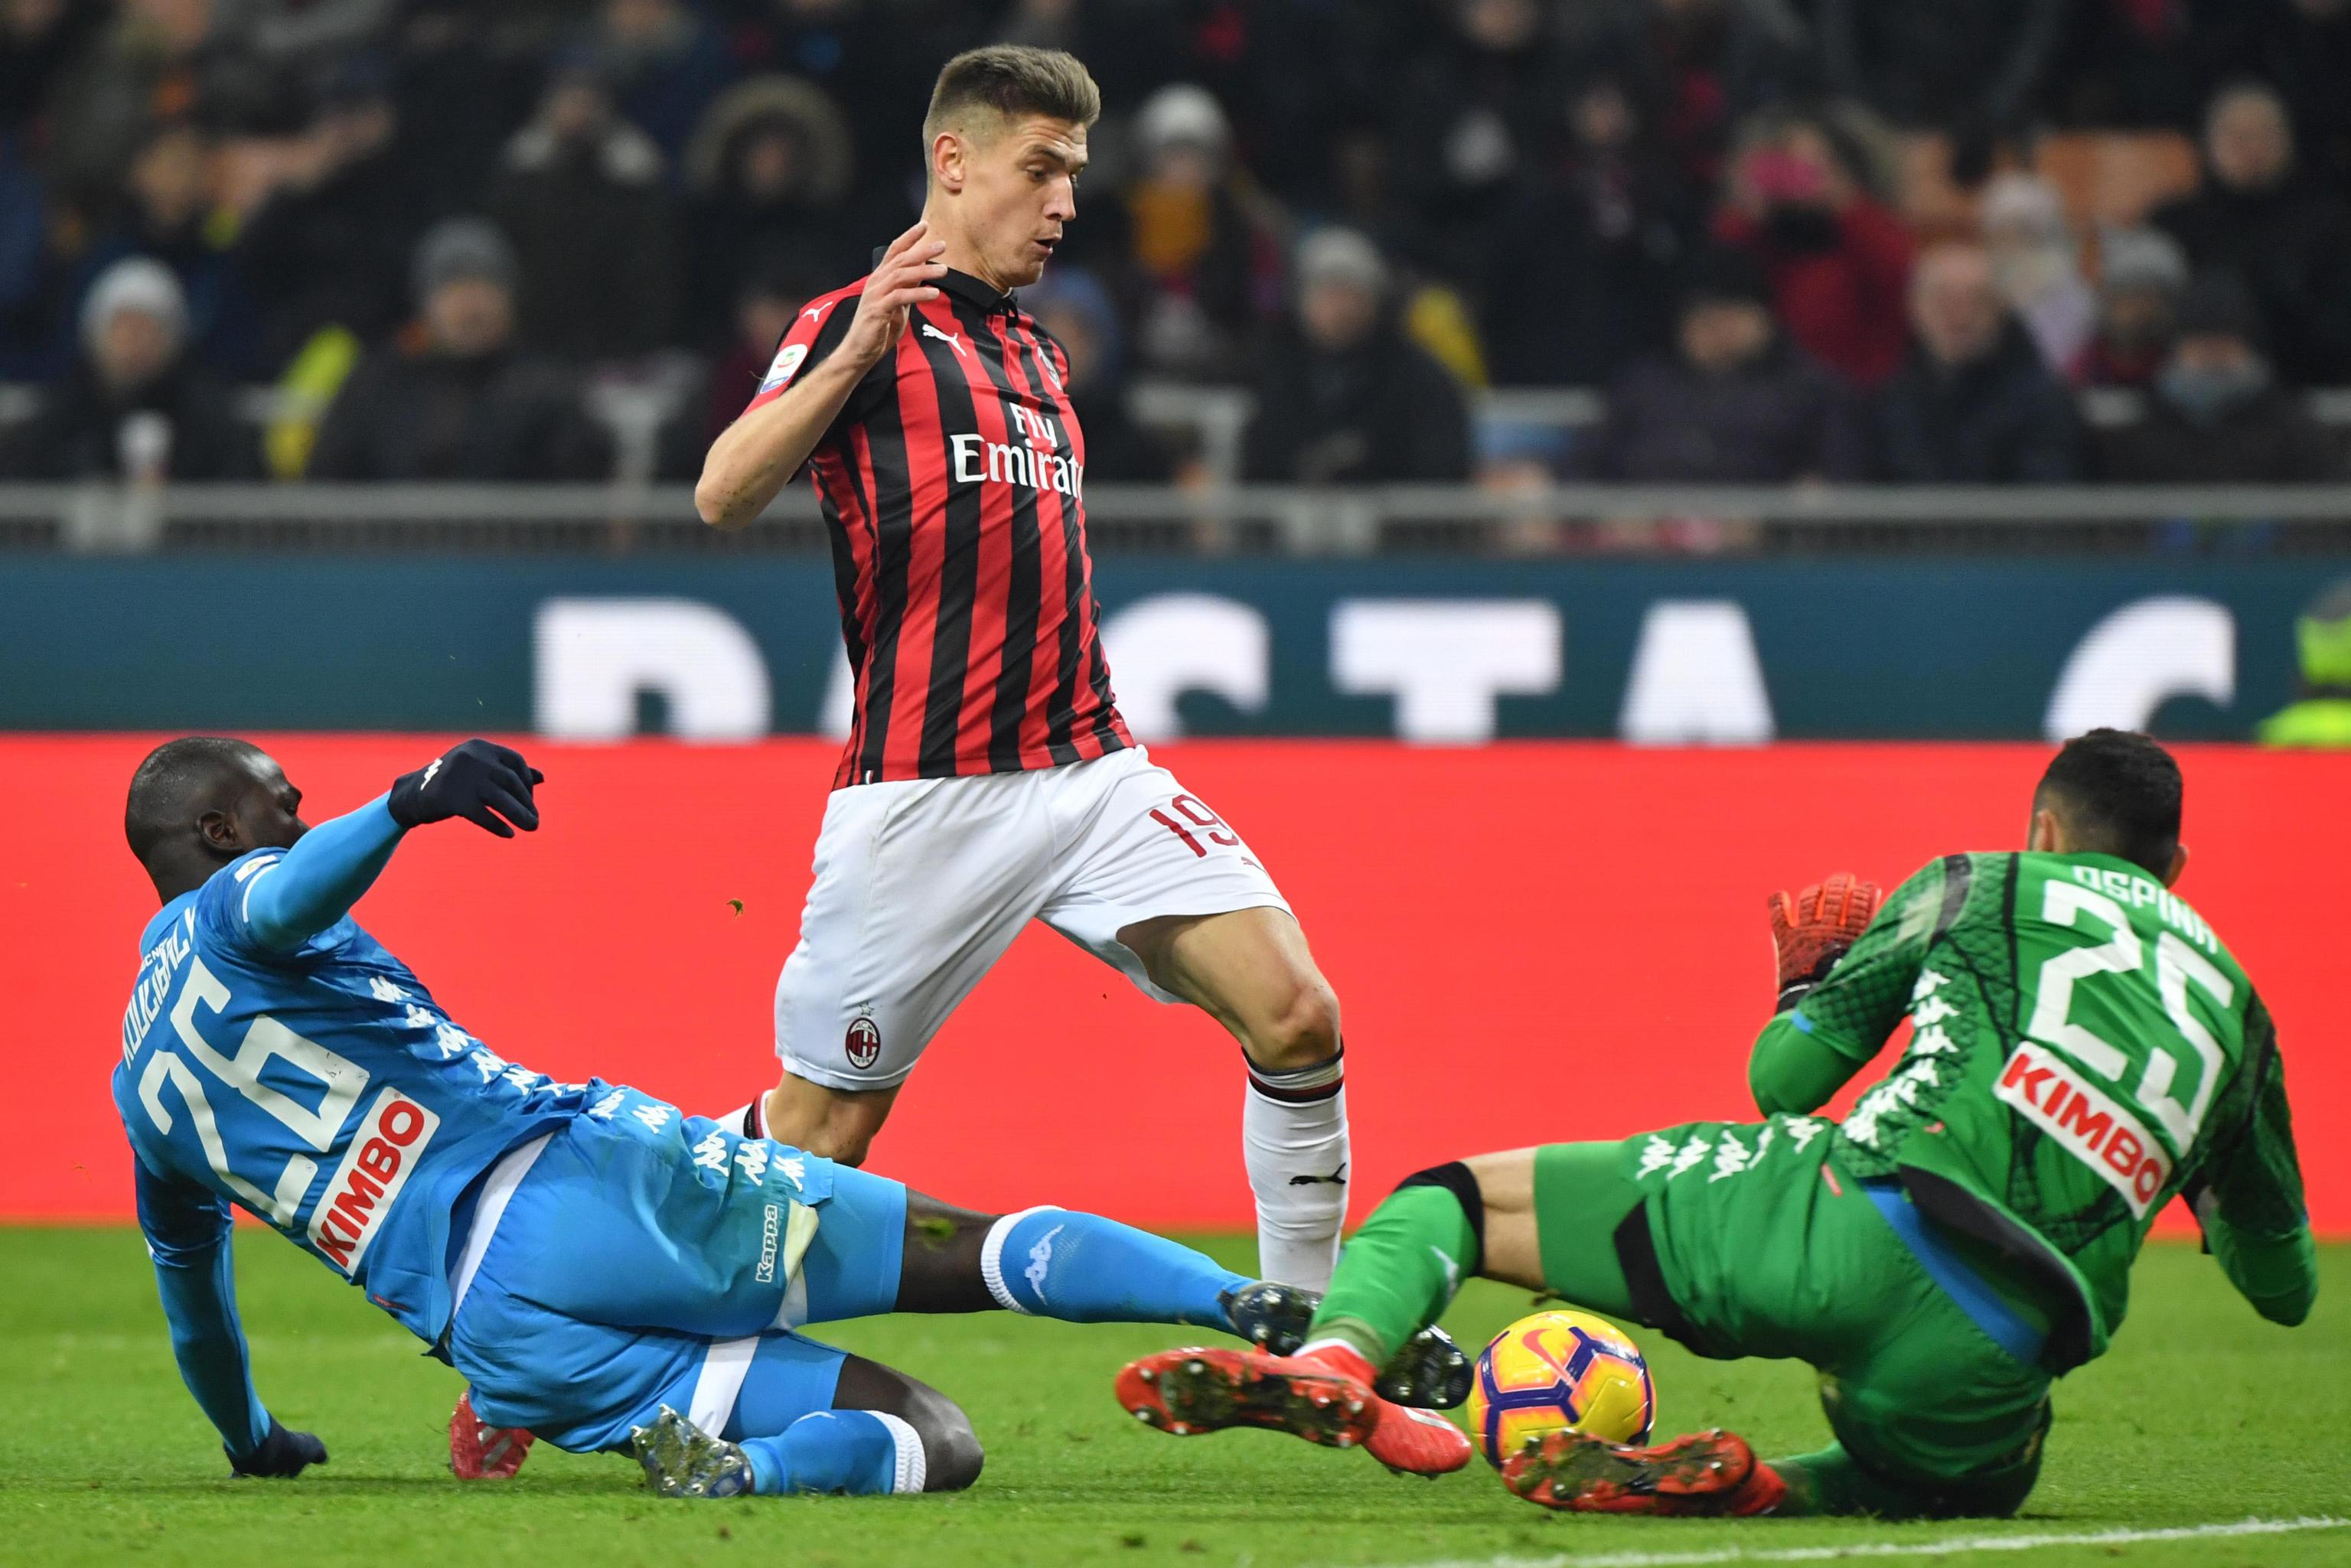 Tra Milan e Napoli regna l'equilibrio: a San Siro finisce 0 -0 